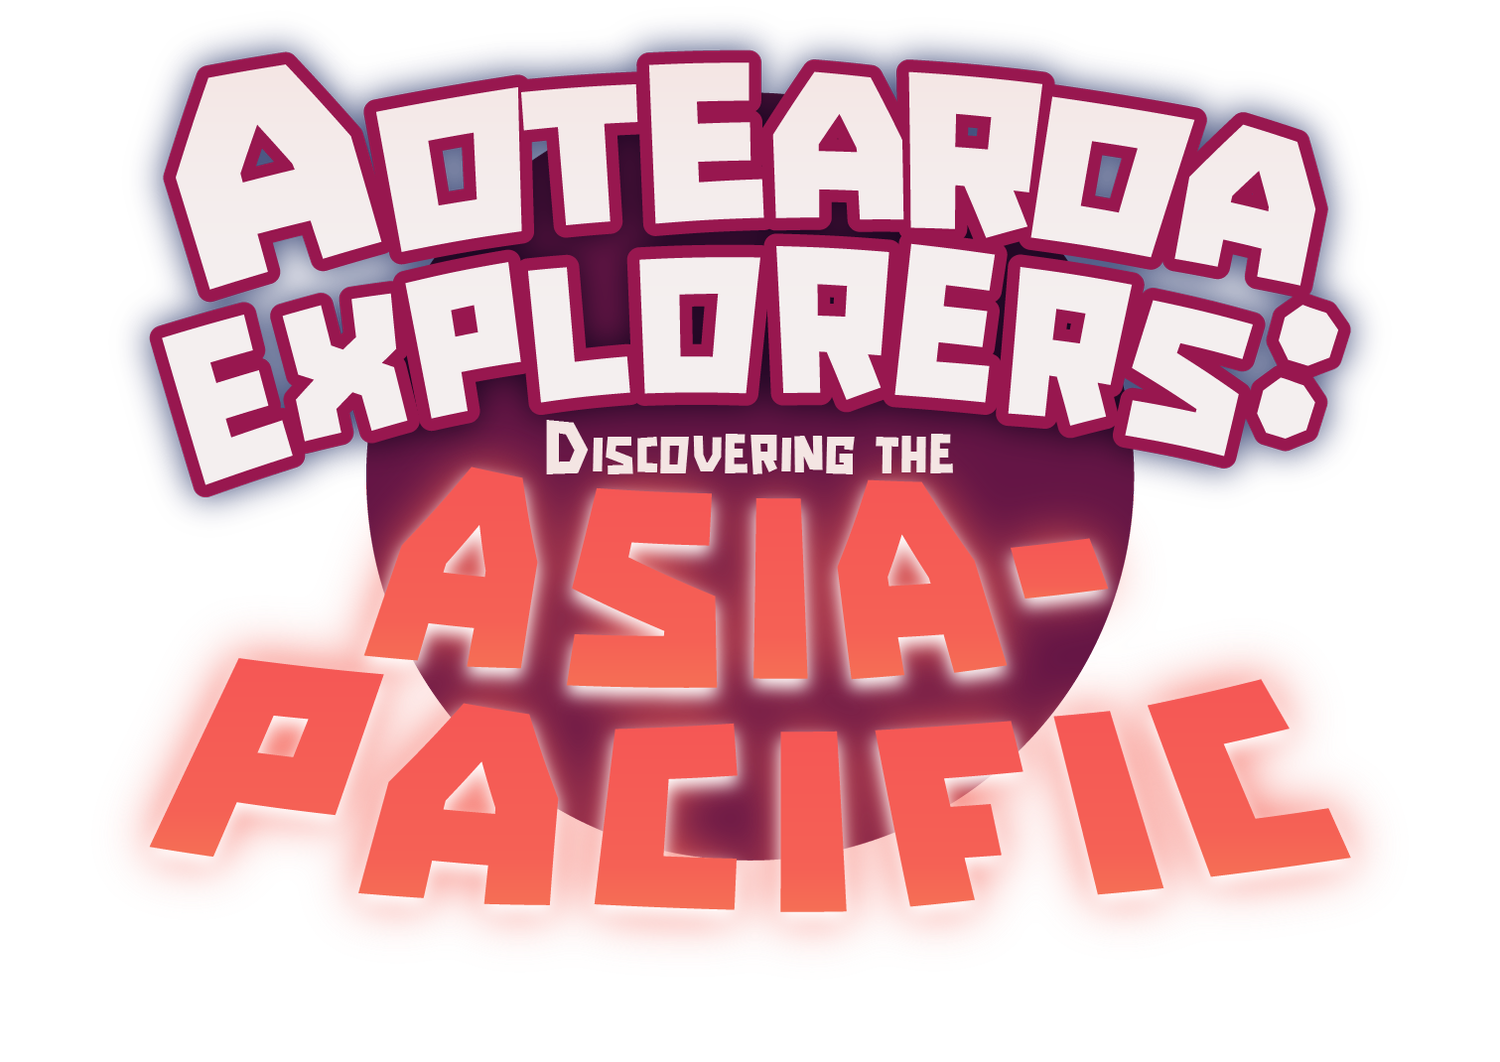 Aotearoa Explorers - Discovering the Asia-Pacific